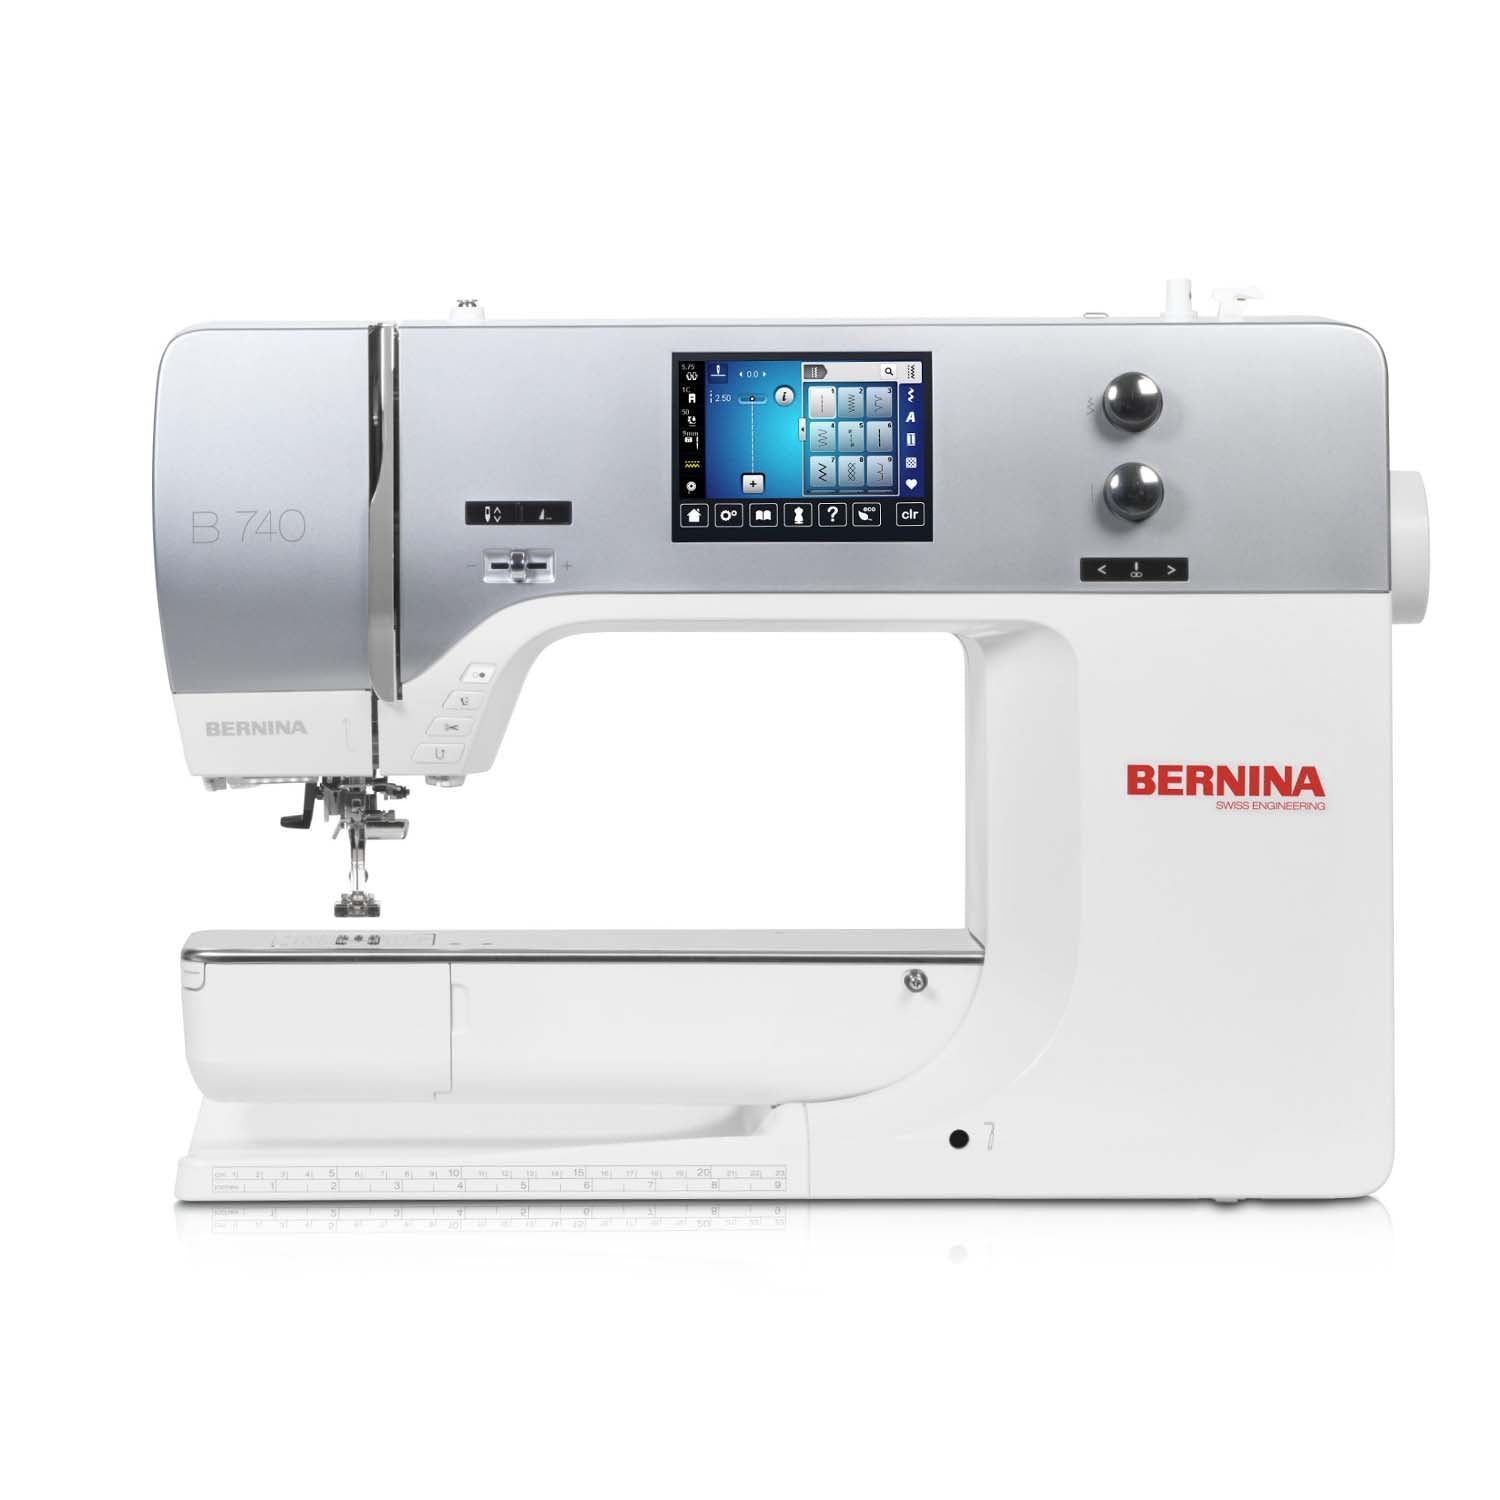 BERNINA 740 Sewing Machine